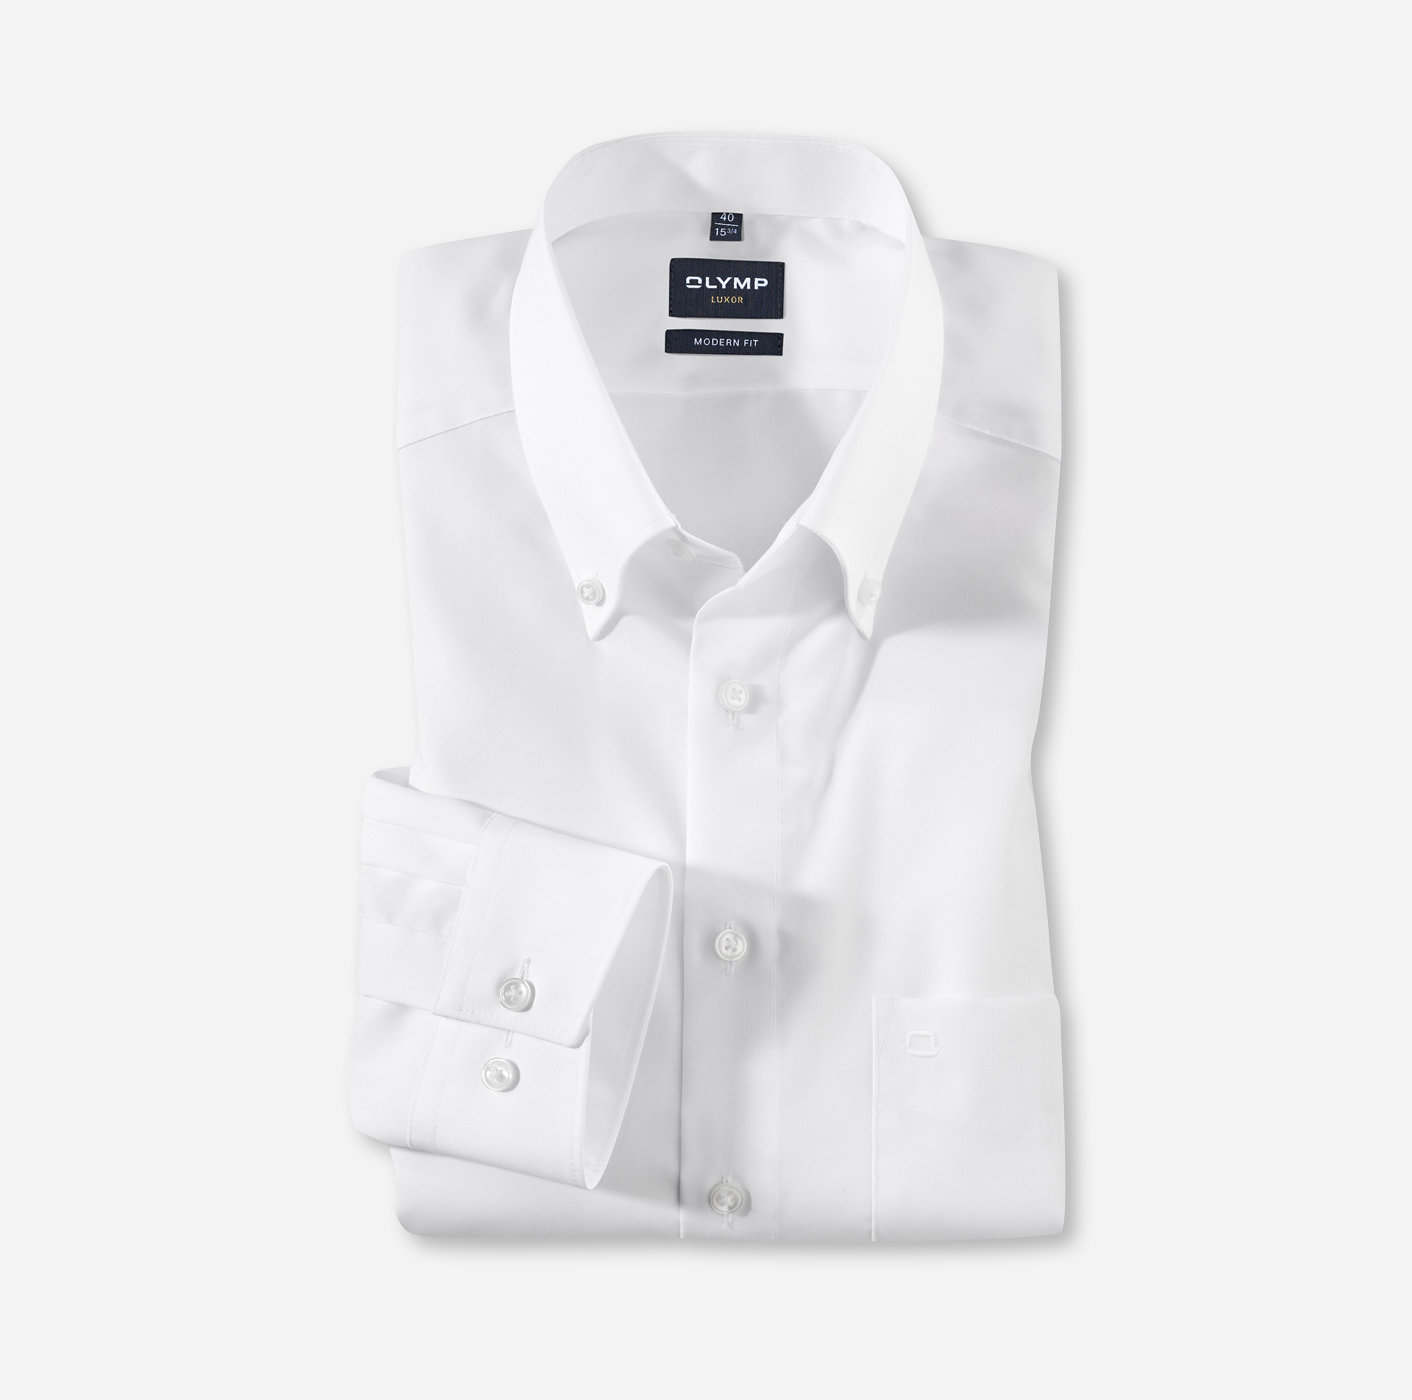 OLYMP Luxor, modern fit, Business shirt, Pointes boutonnées, Blanc